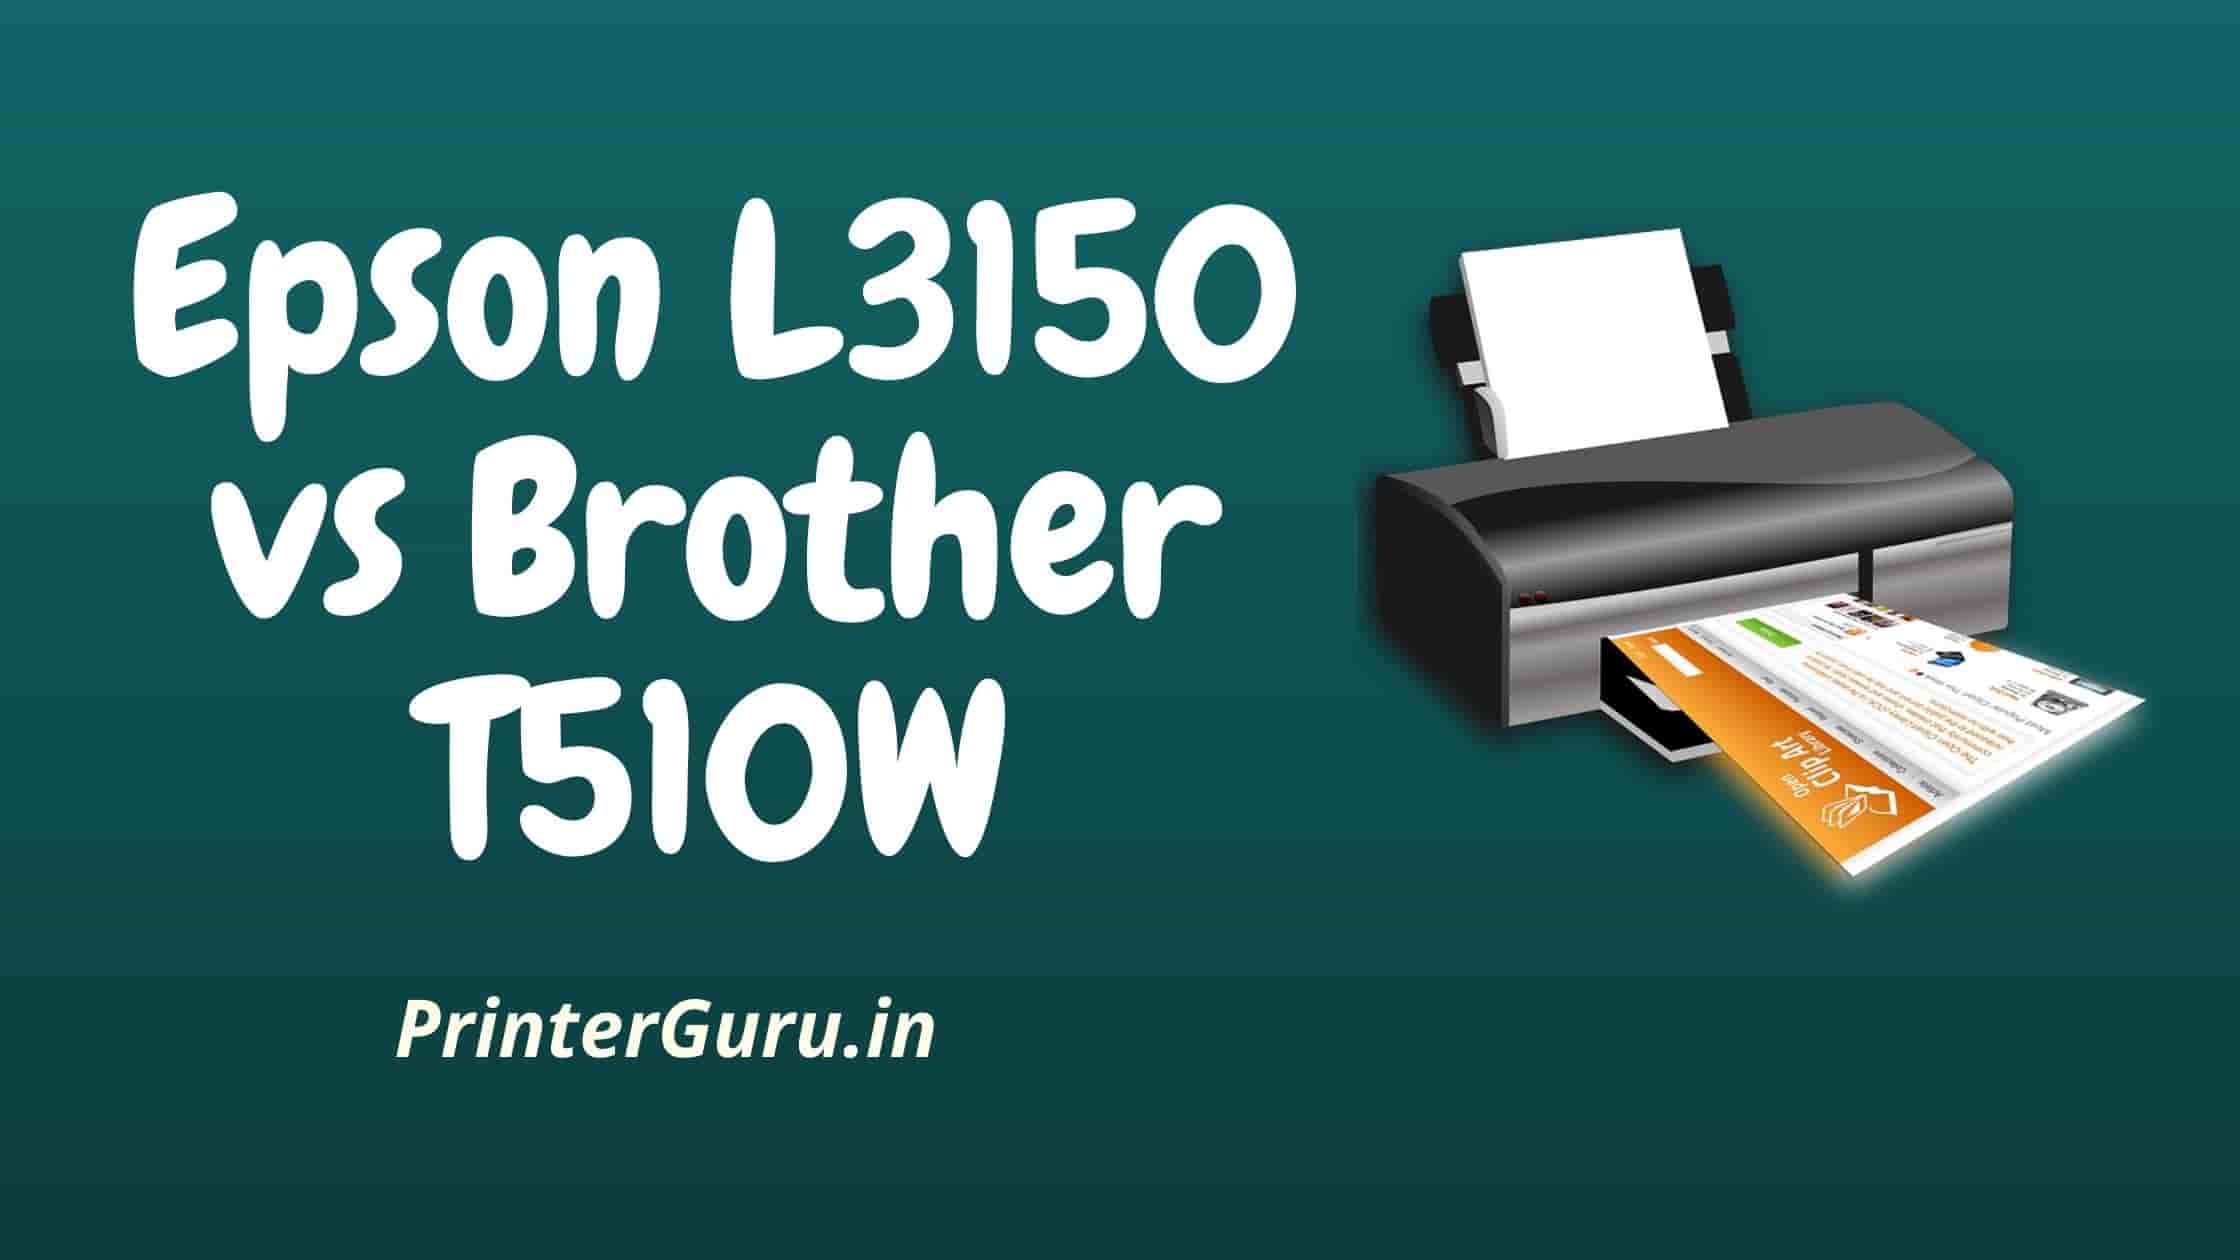 Epson L3150 vs Brother T510W